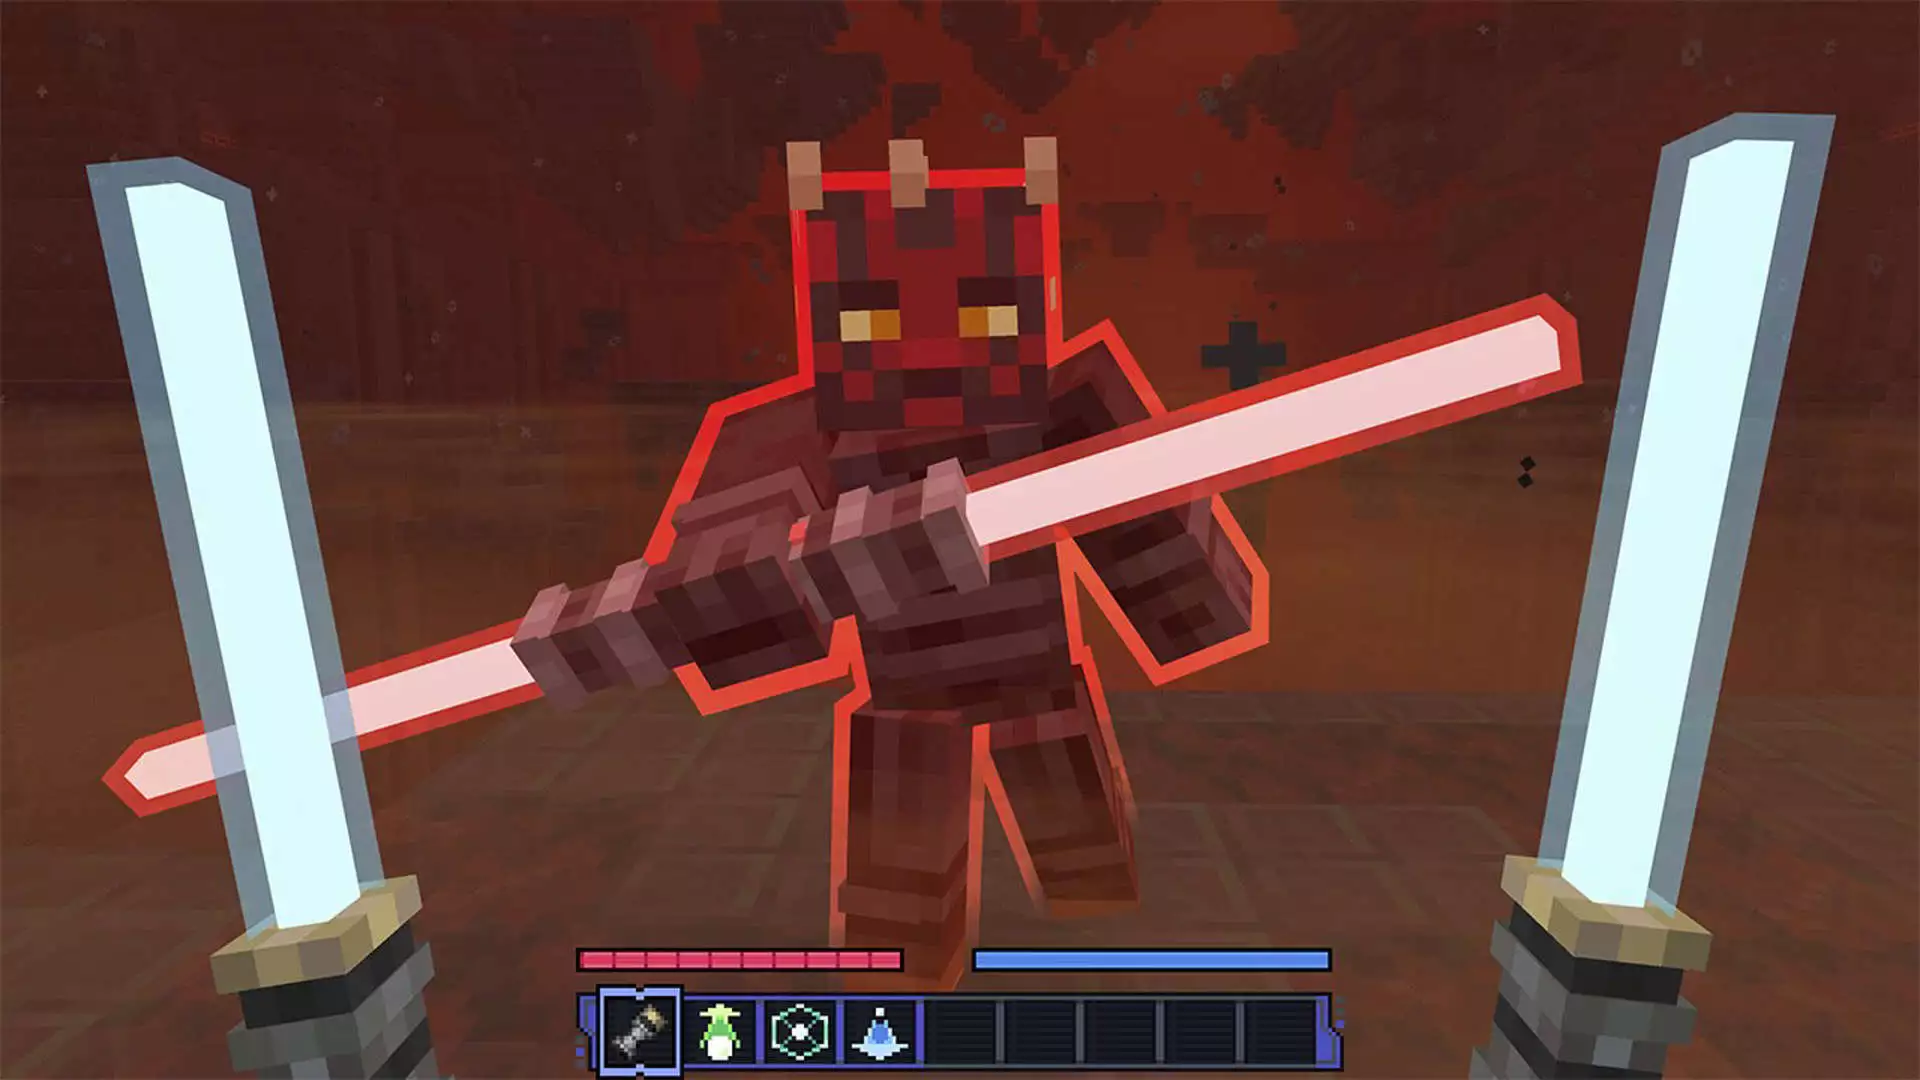 Minecraft Star Wars: Path of the Jedi Hadirkan Petulangan Star Wars yang Epik!